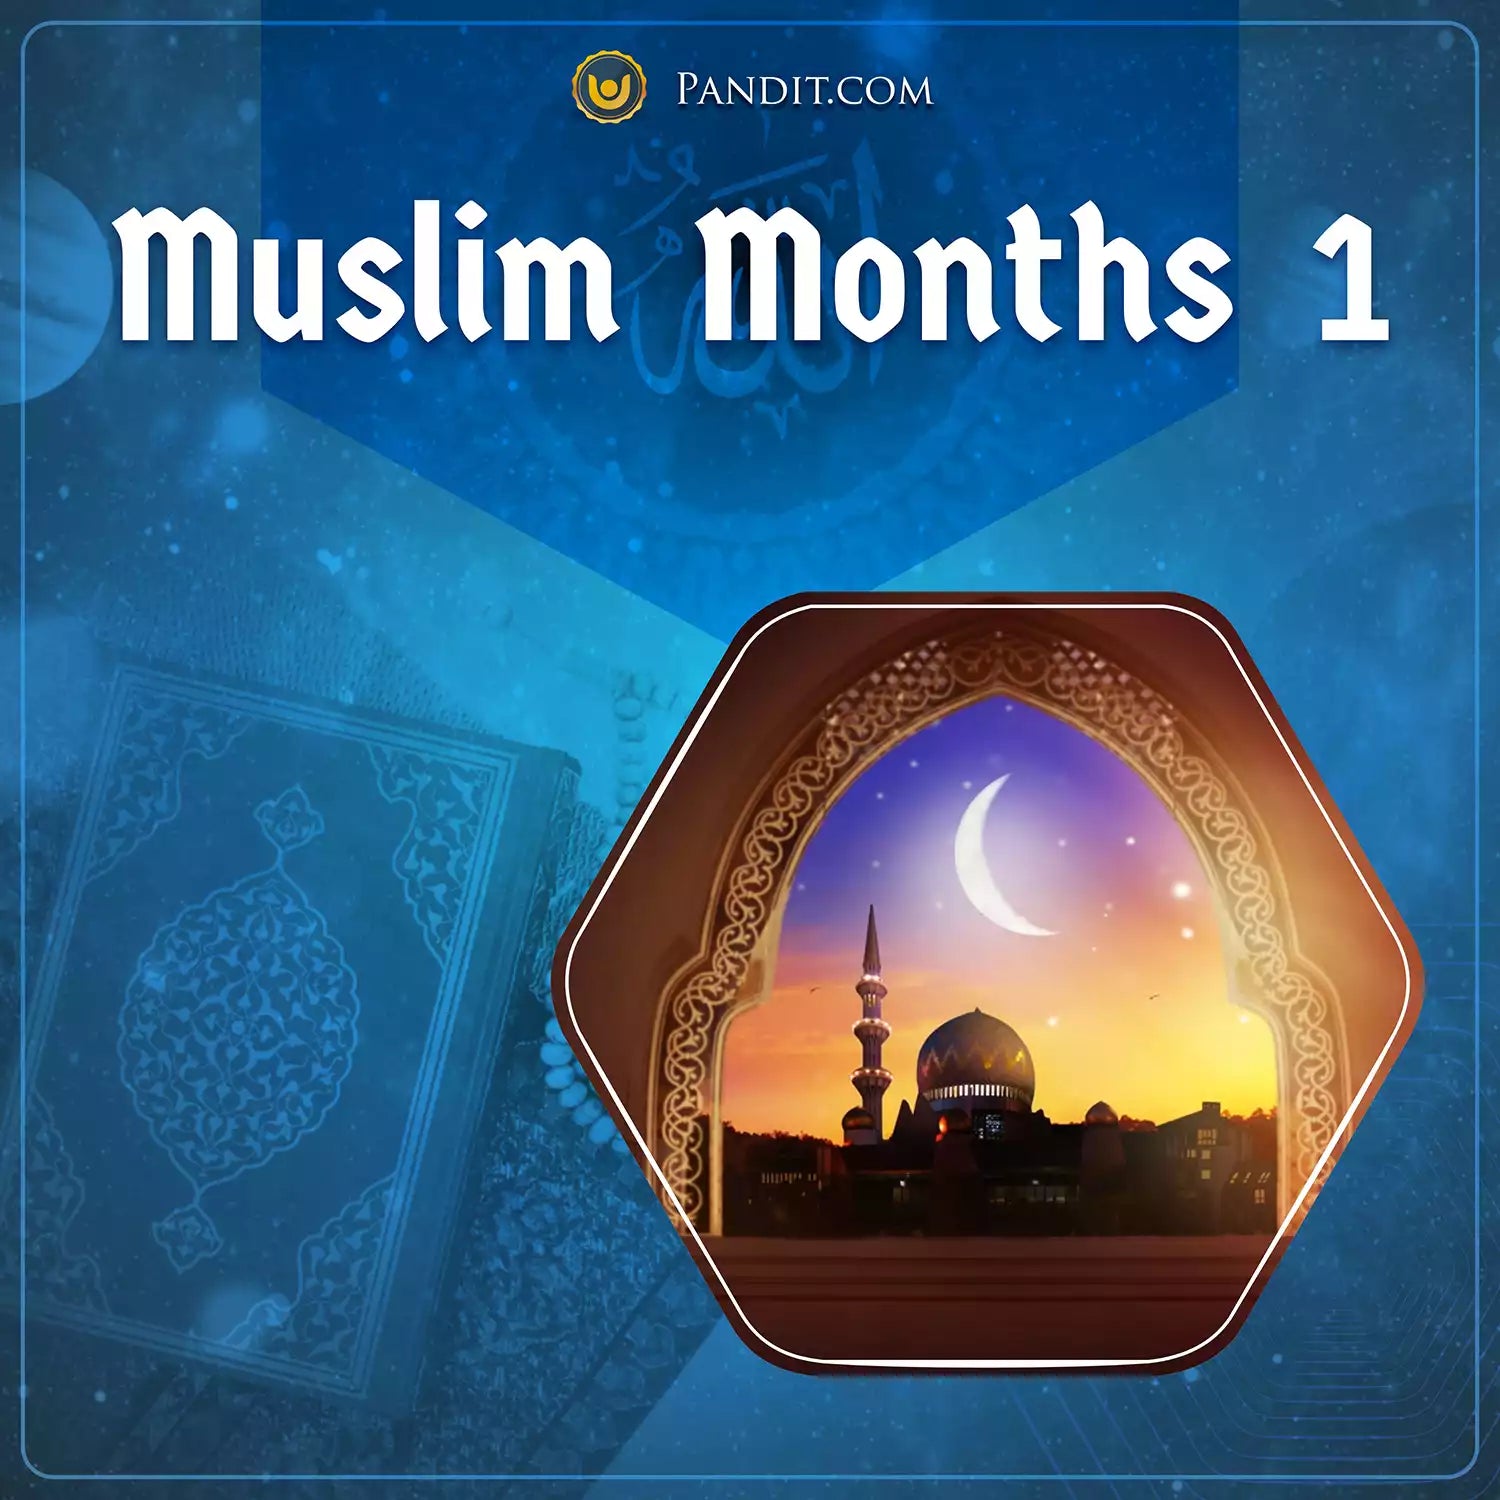 Muslim Month 1